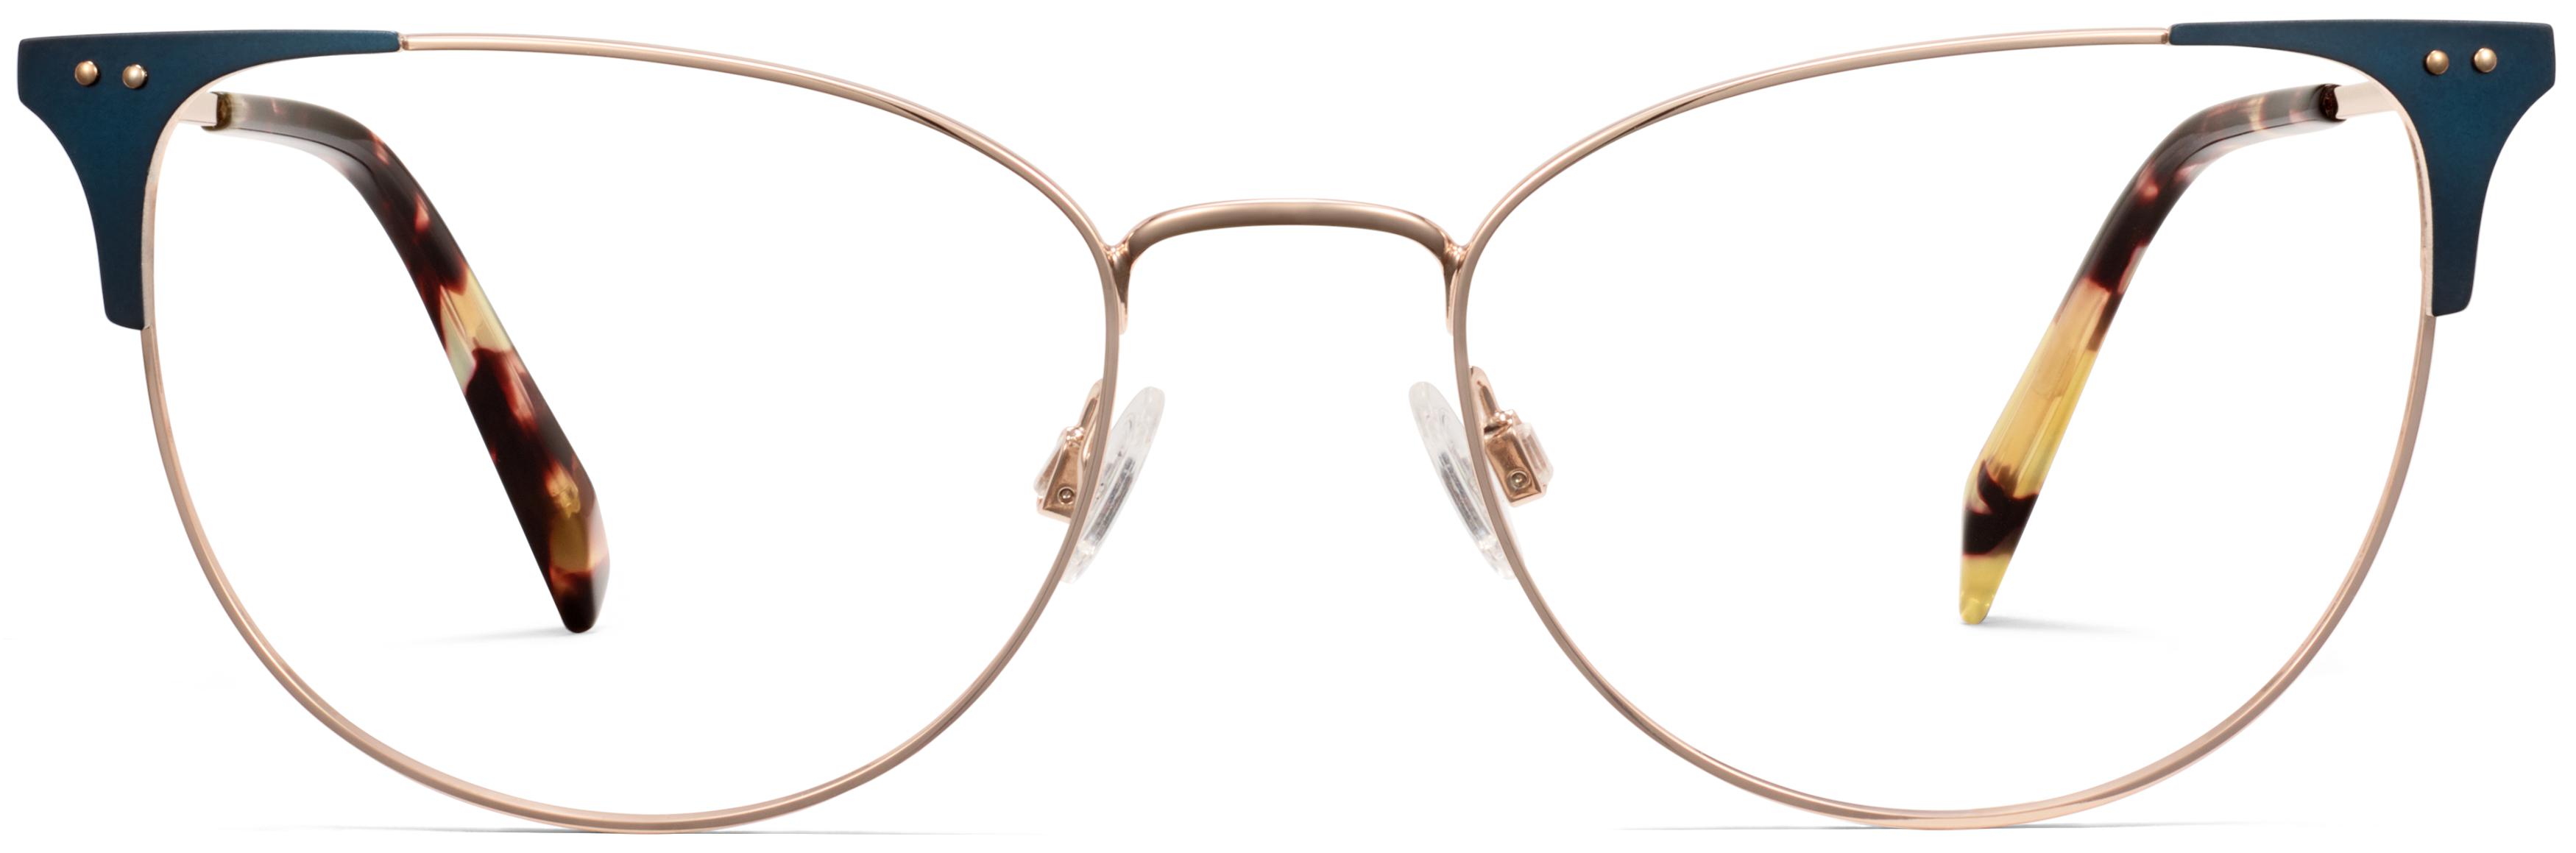 kuhanje bez značenja Vulkanski  Toula Eyeglasses in Tanzanite Tortoise with Polished Gold | Warby Parker